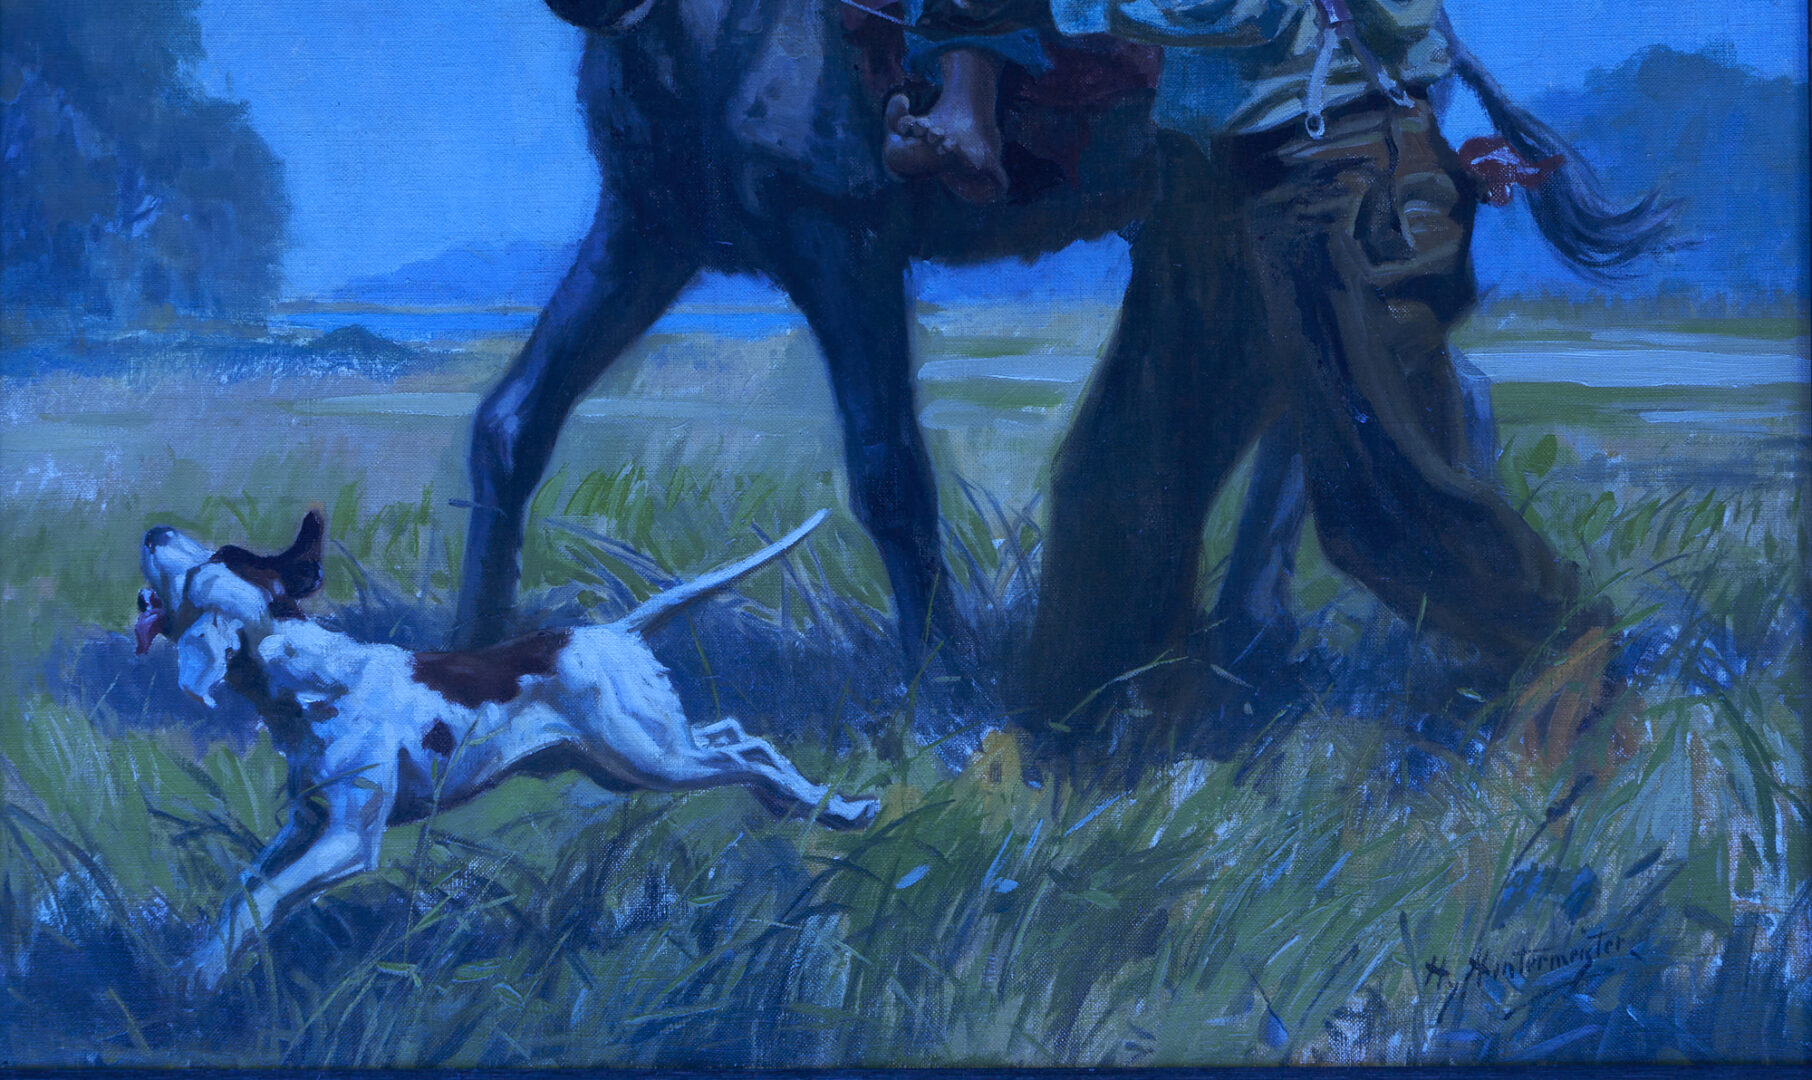 Lot 563: Henry Hy Hintermeister O/C Illustration Art Painting, The Donkey Ride